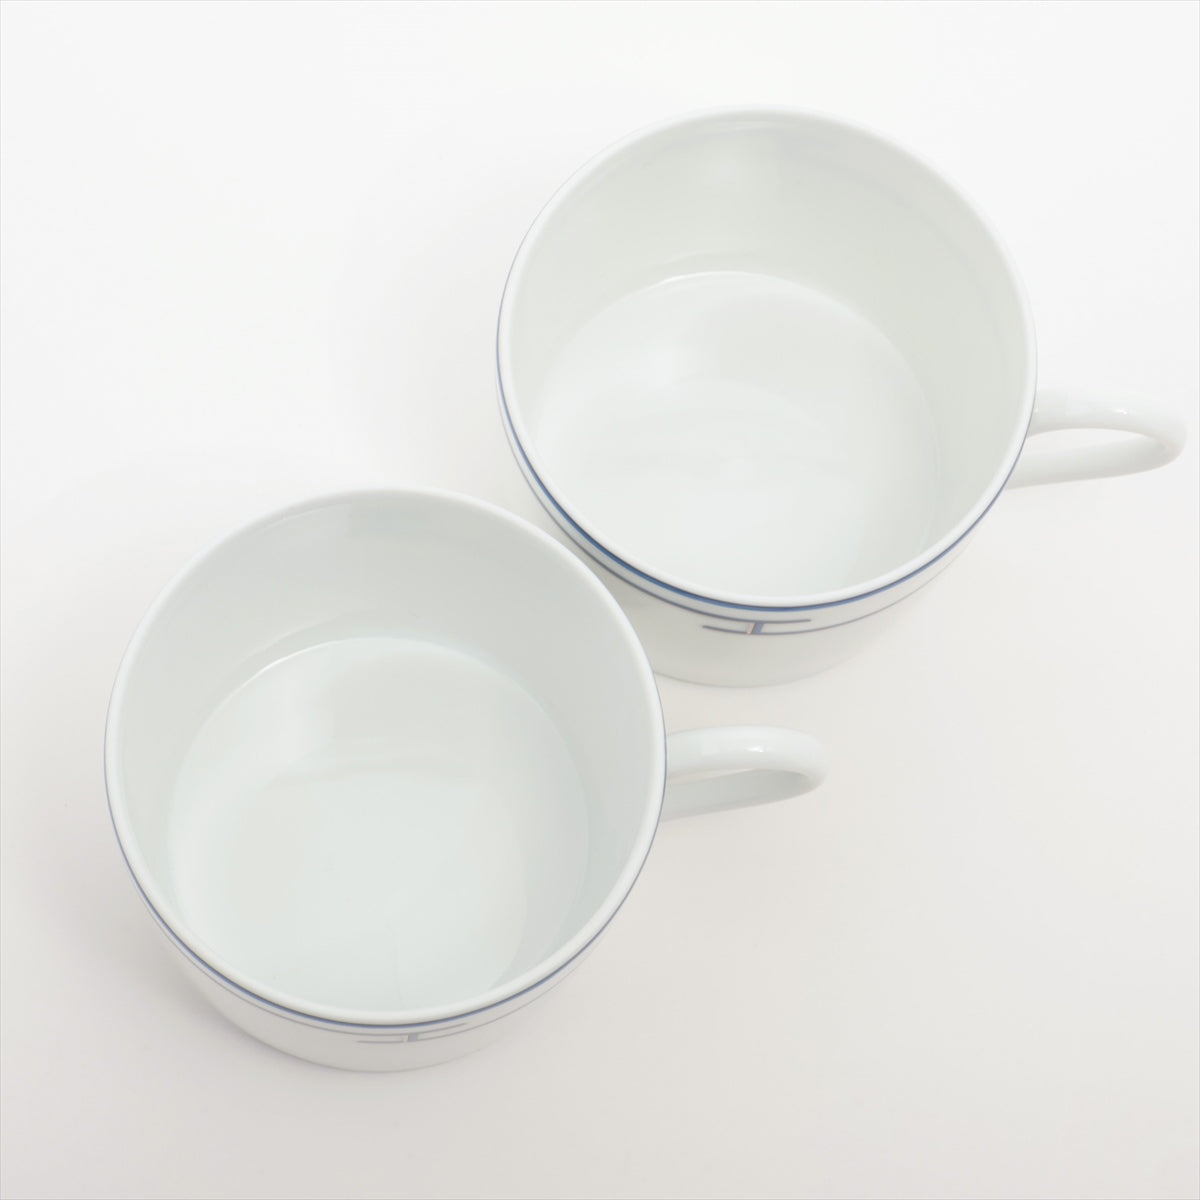 Hermès Rhythm cup and saucer Ceramic Blue x white 2 guests pair set